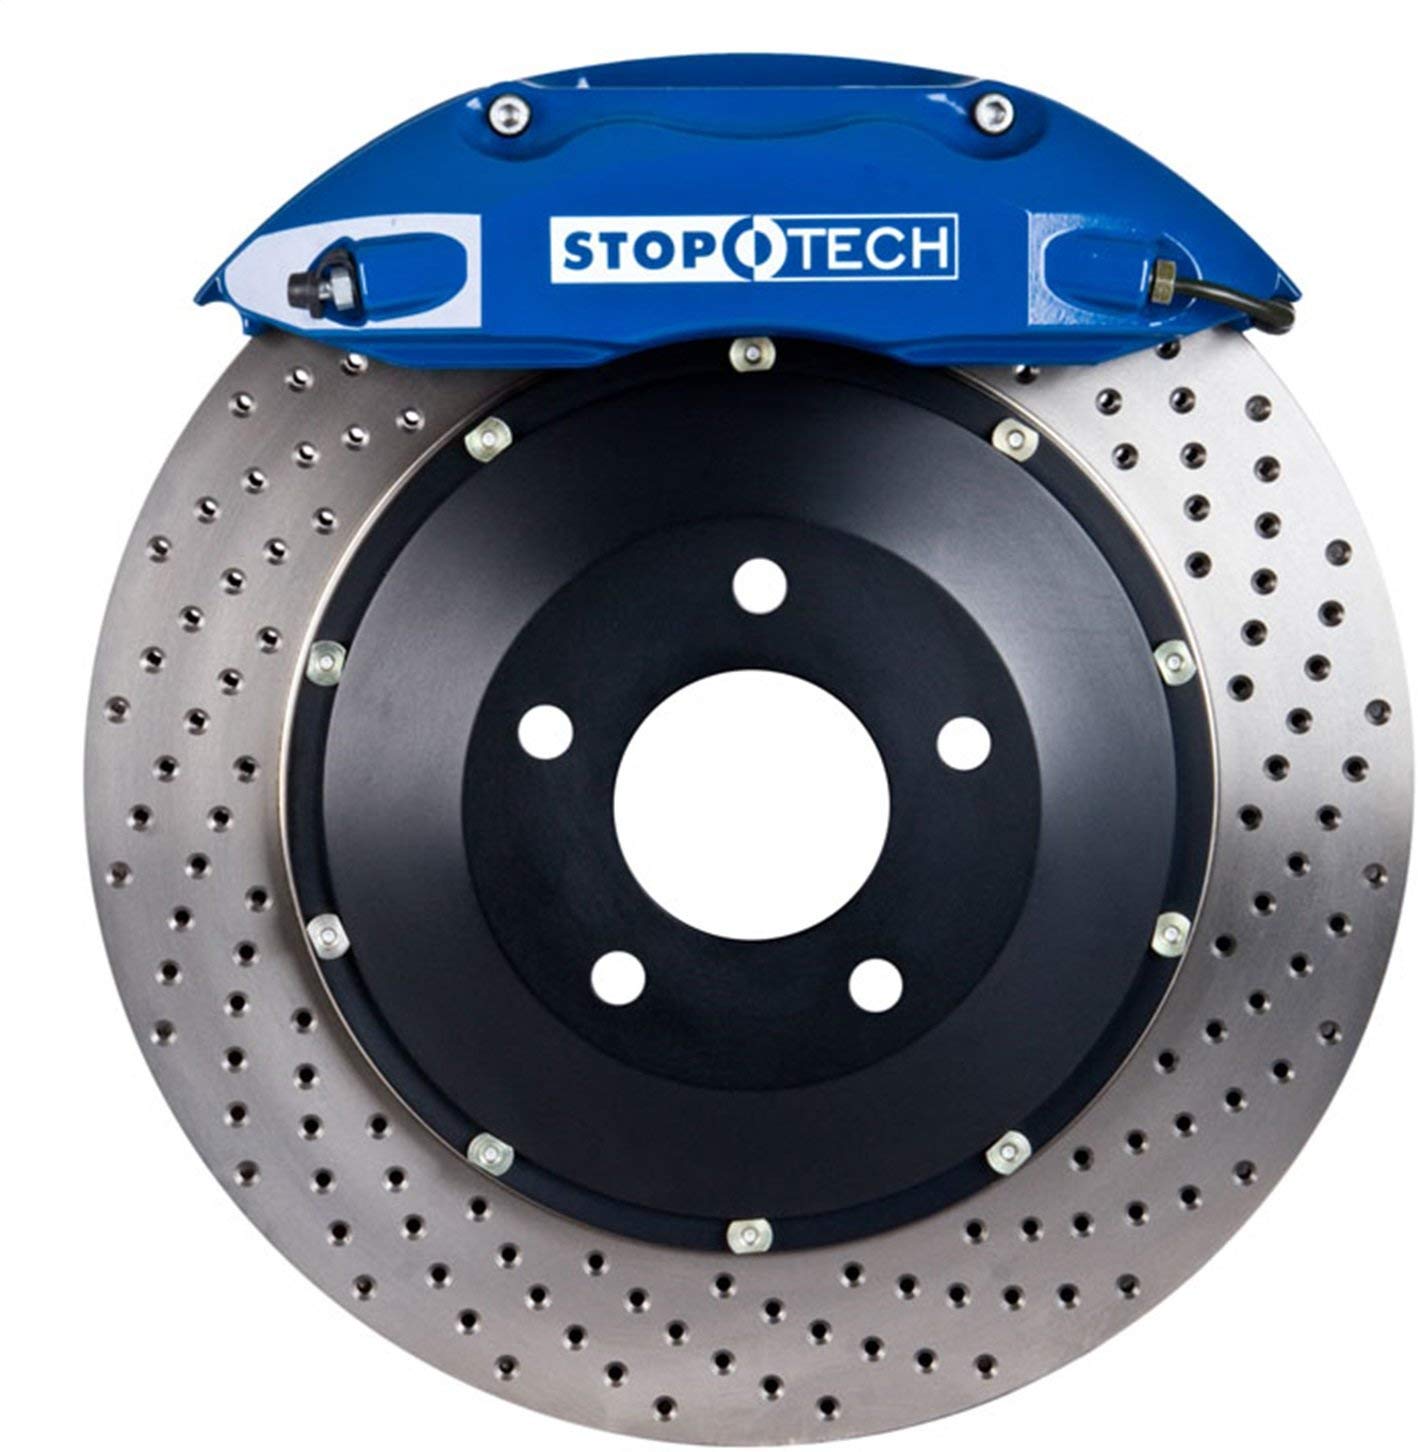 StopTech 83.549.4300.22 Big Brake Rotor Kit (Front, 2 Piece)